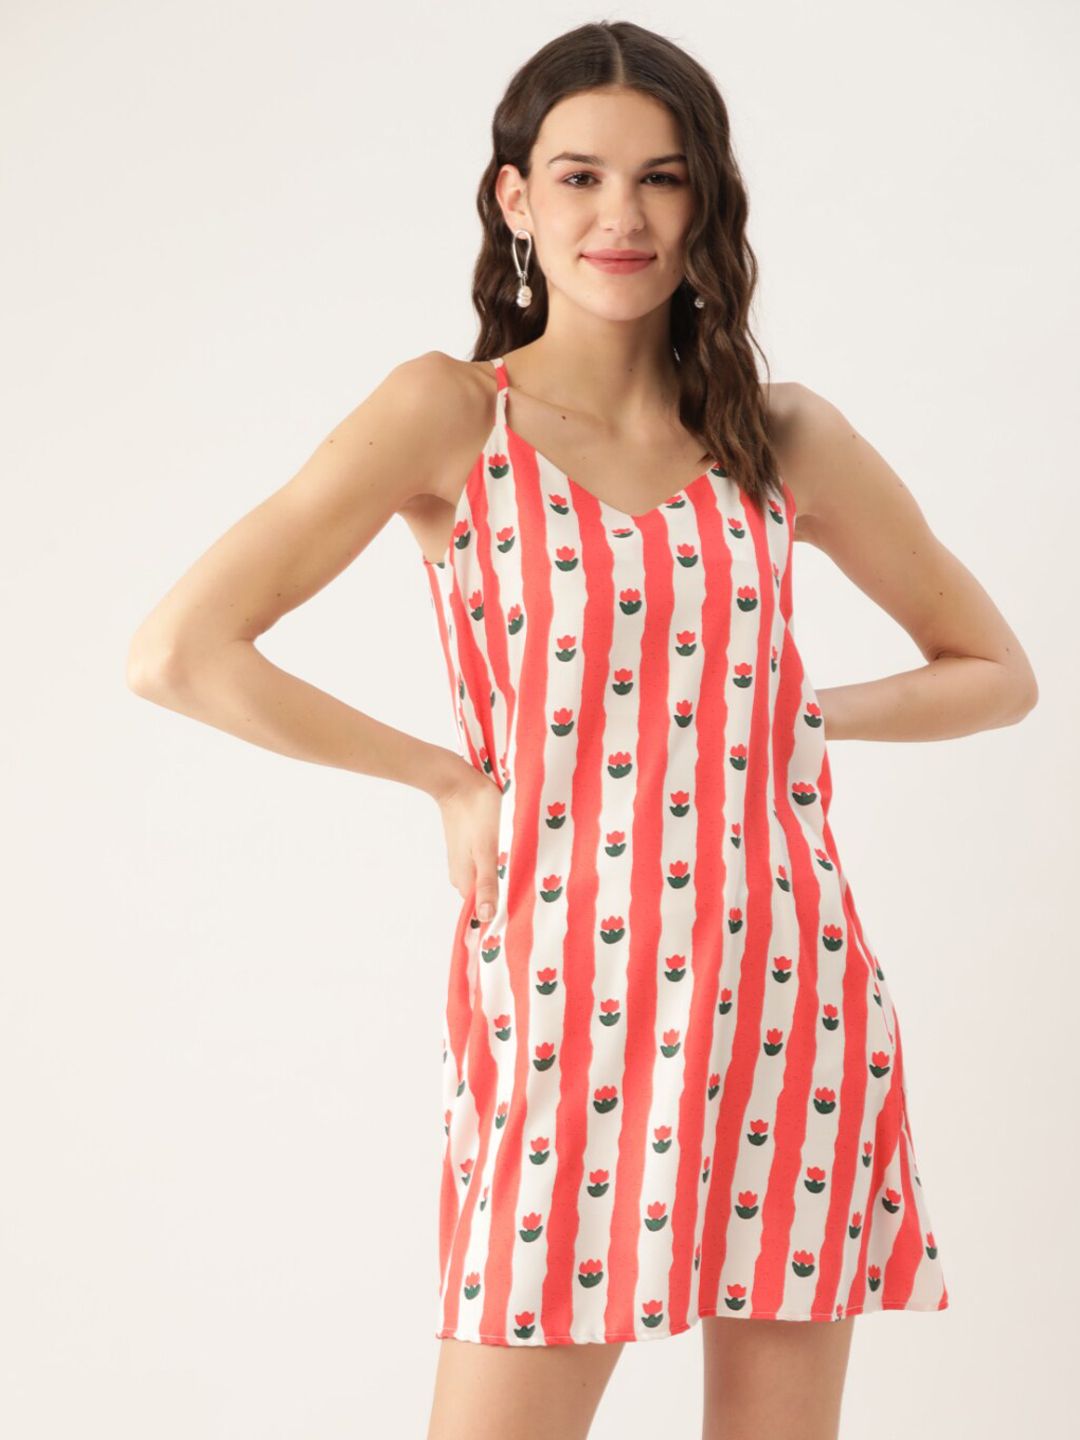 shiloh Off White & Peach-Coloured Printed A-Line Dress Price in India